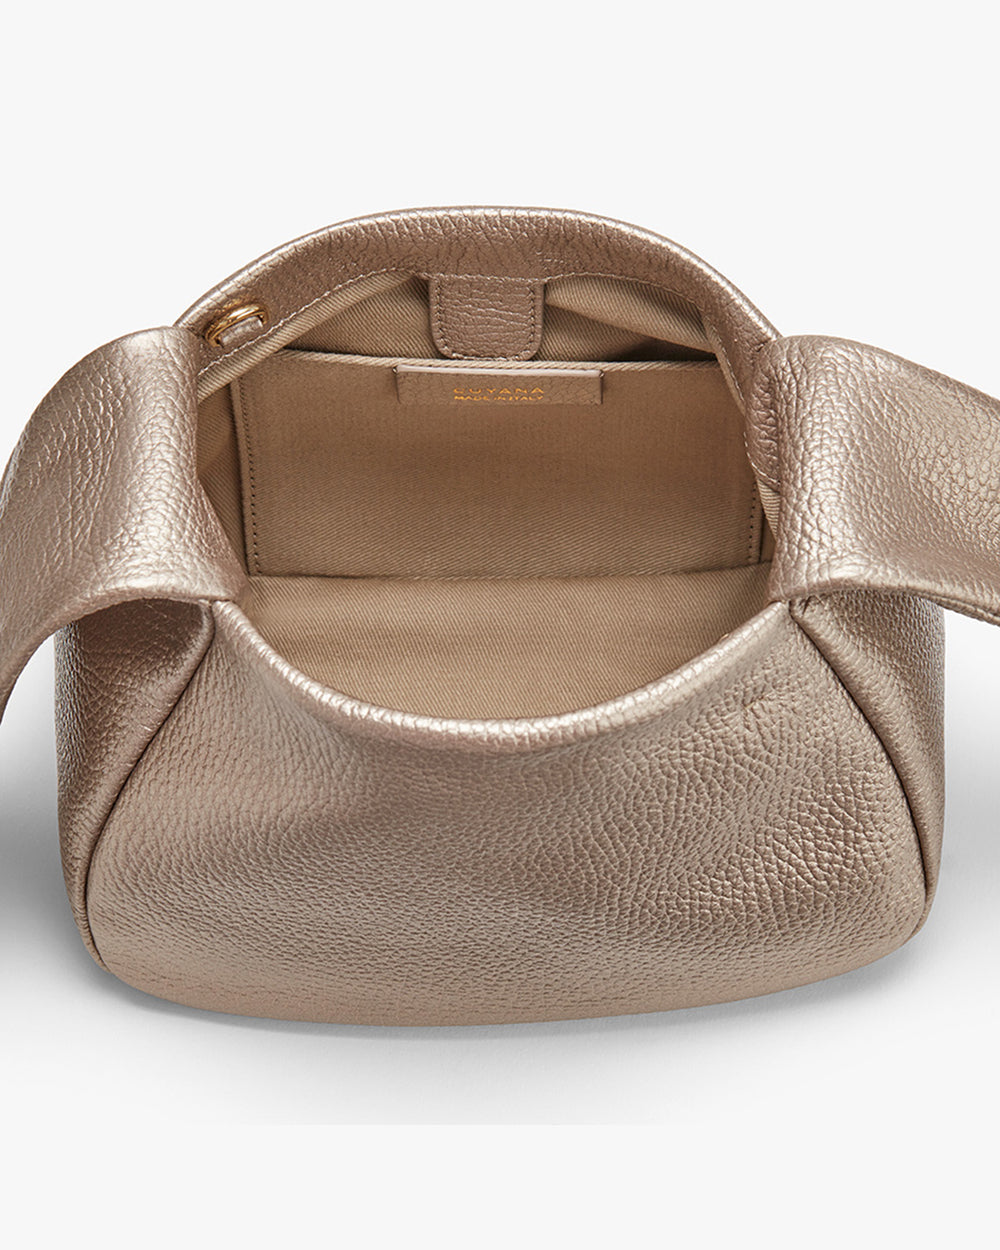 Detachable Gold Handbags, Bags